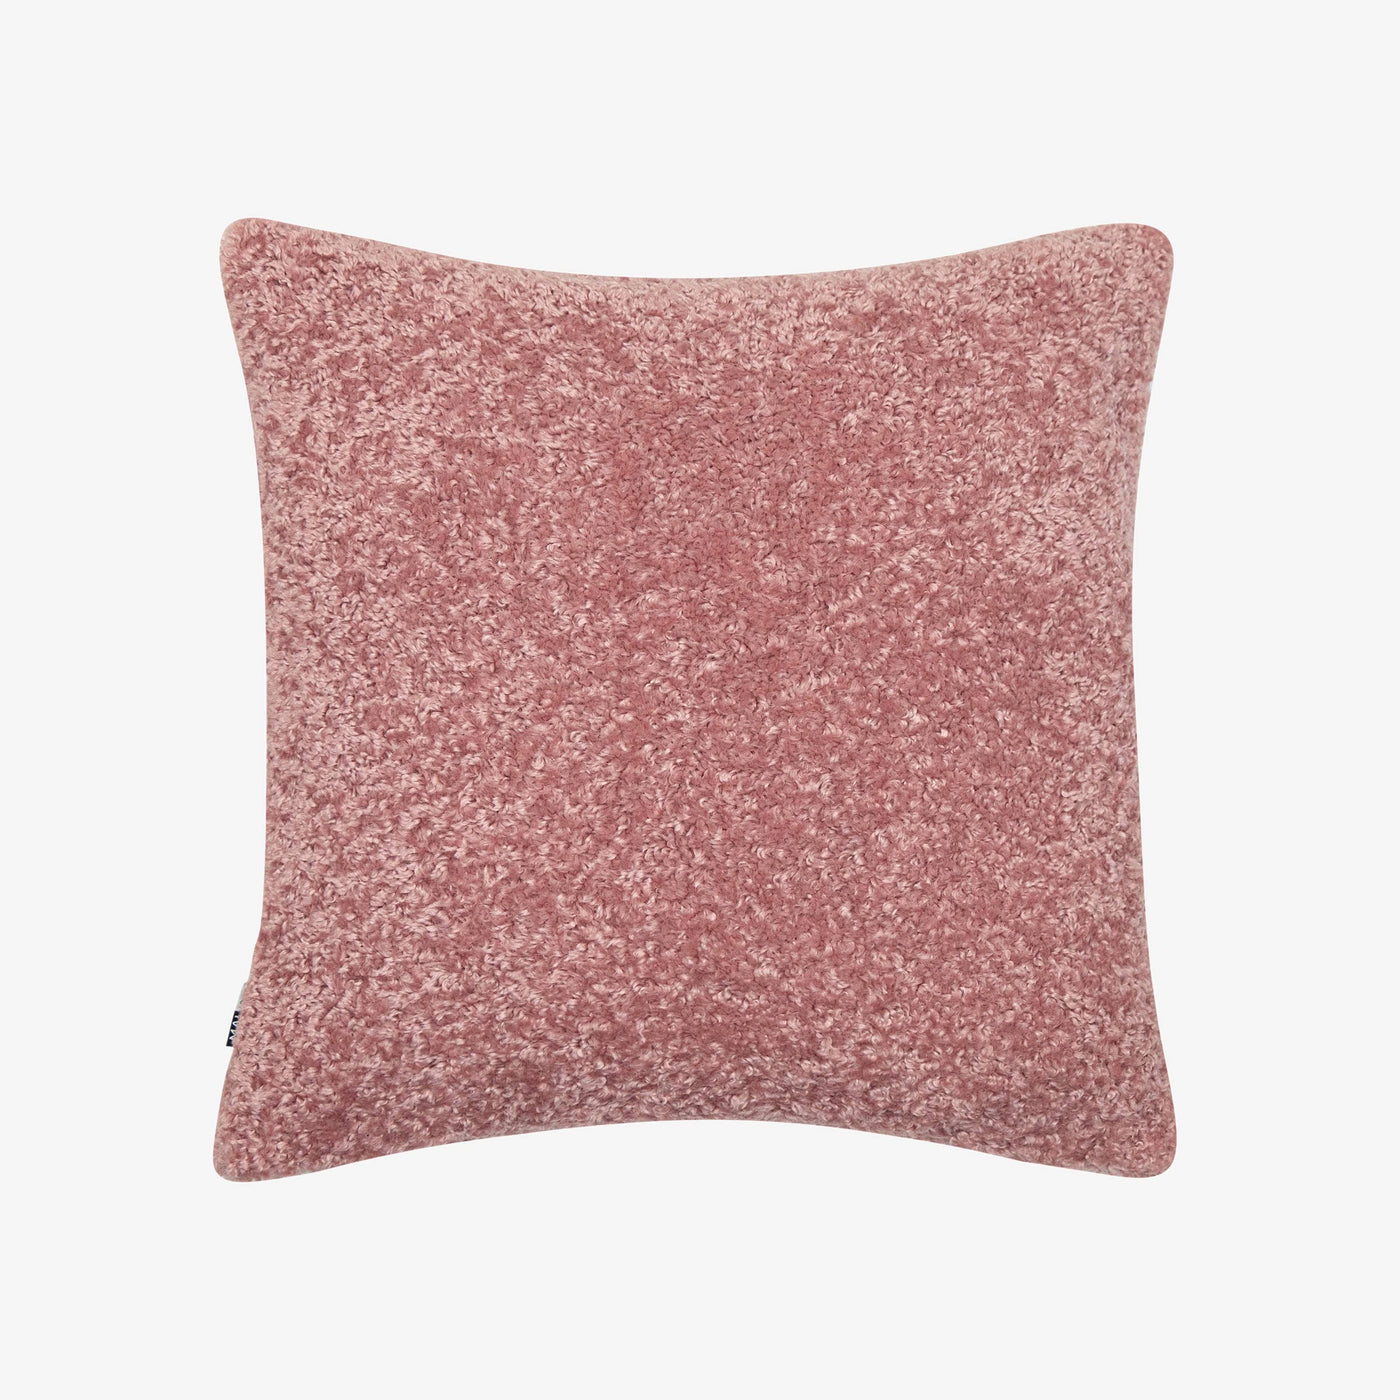 Textured Faux Fur, Pink, 45x45 cm 1